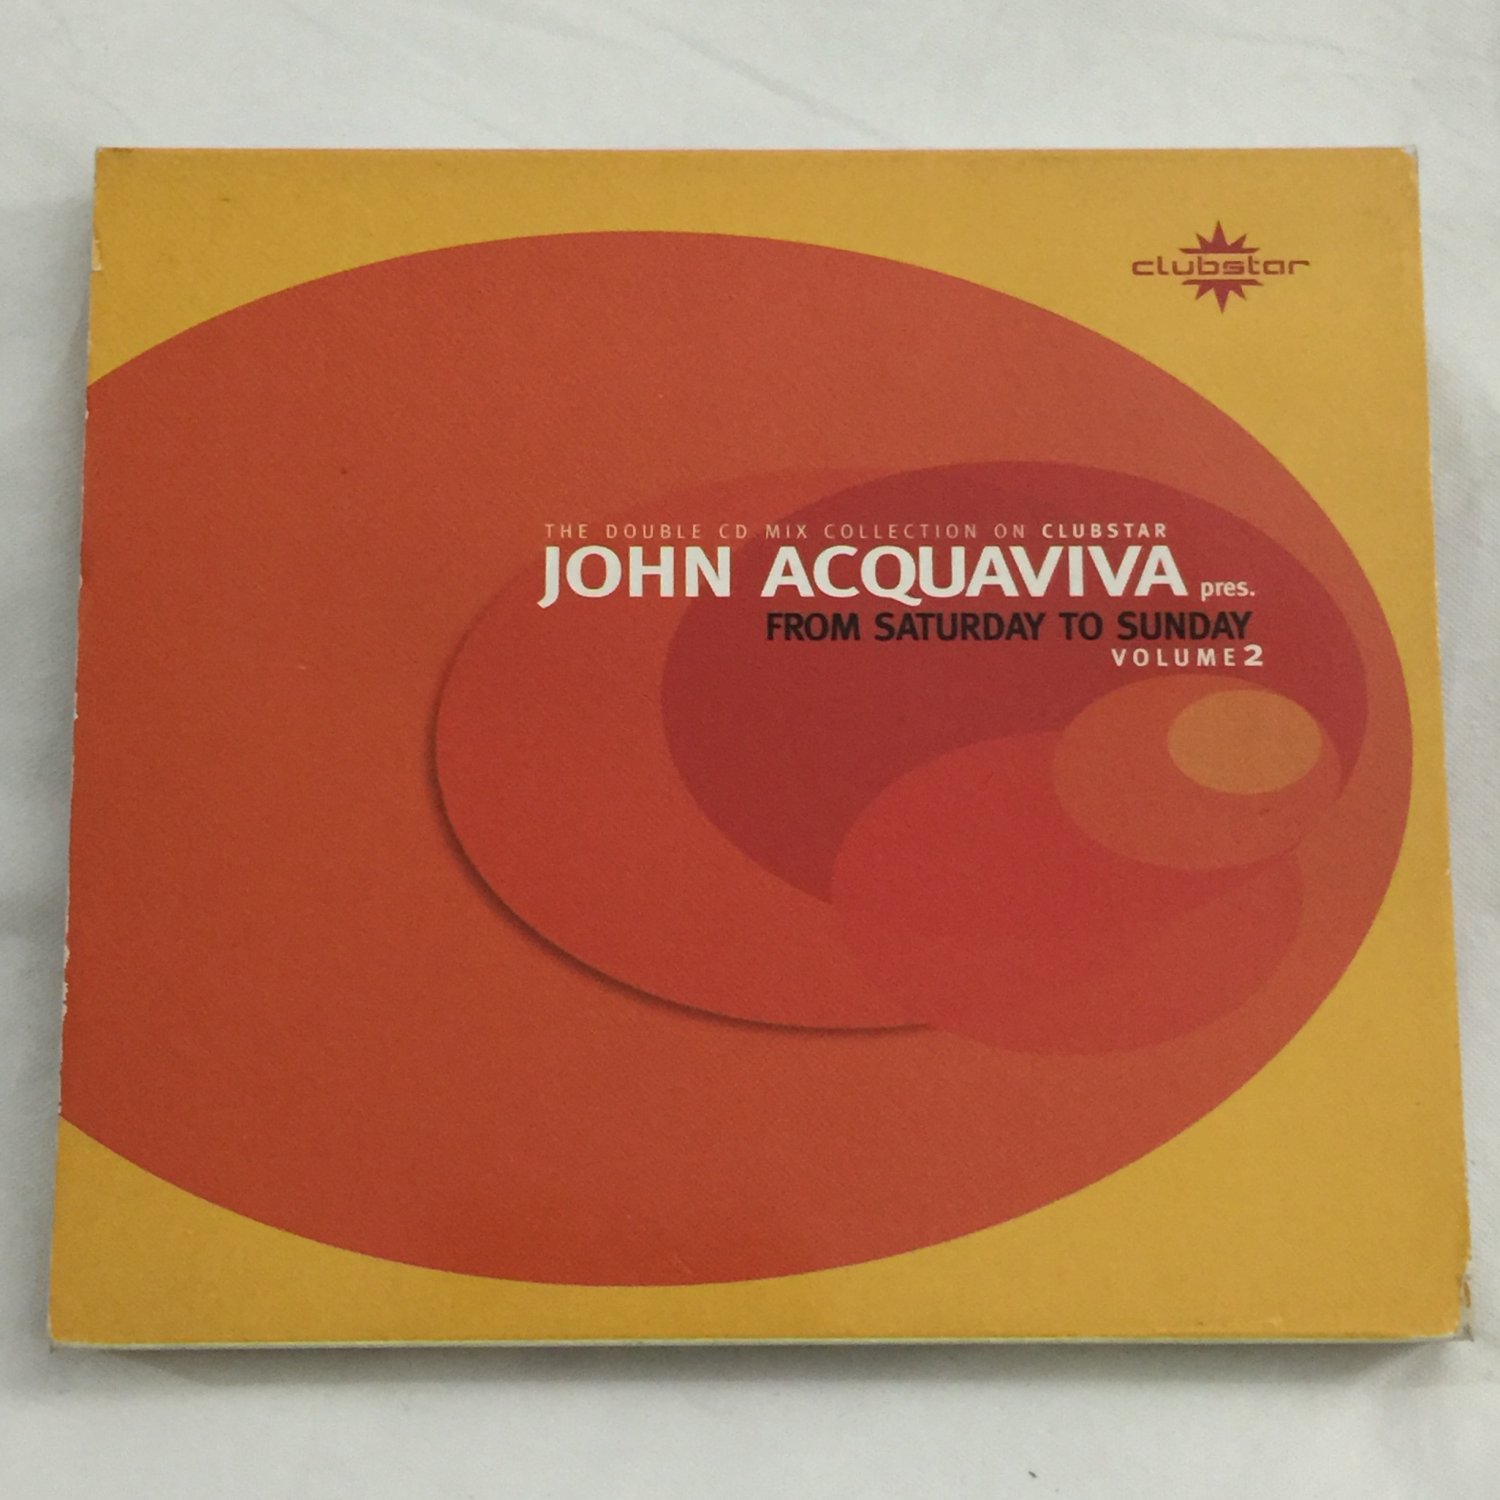 878361CD - John Acquaviva - From Saturday To Sunday Volume 2 (2xCD) CLUBSTAR